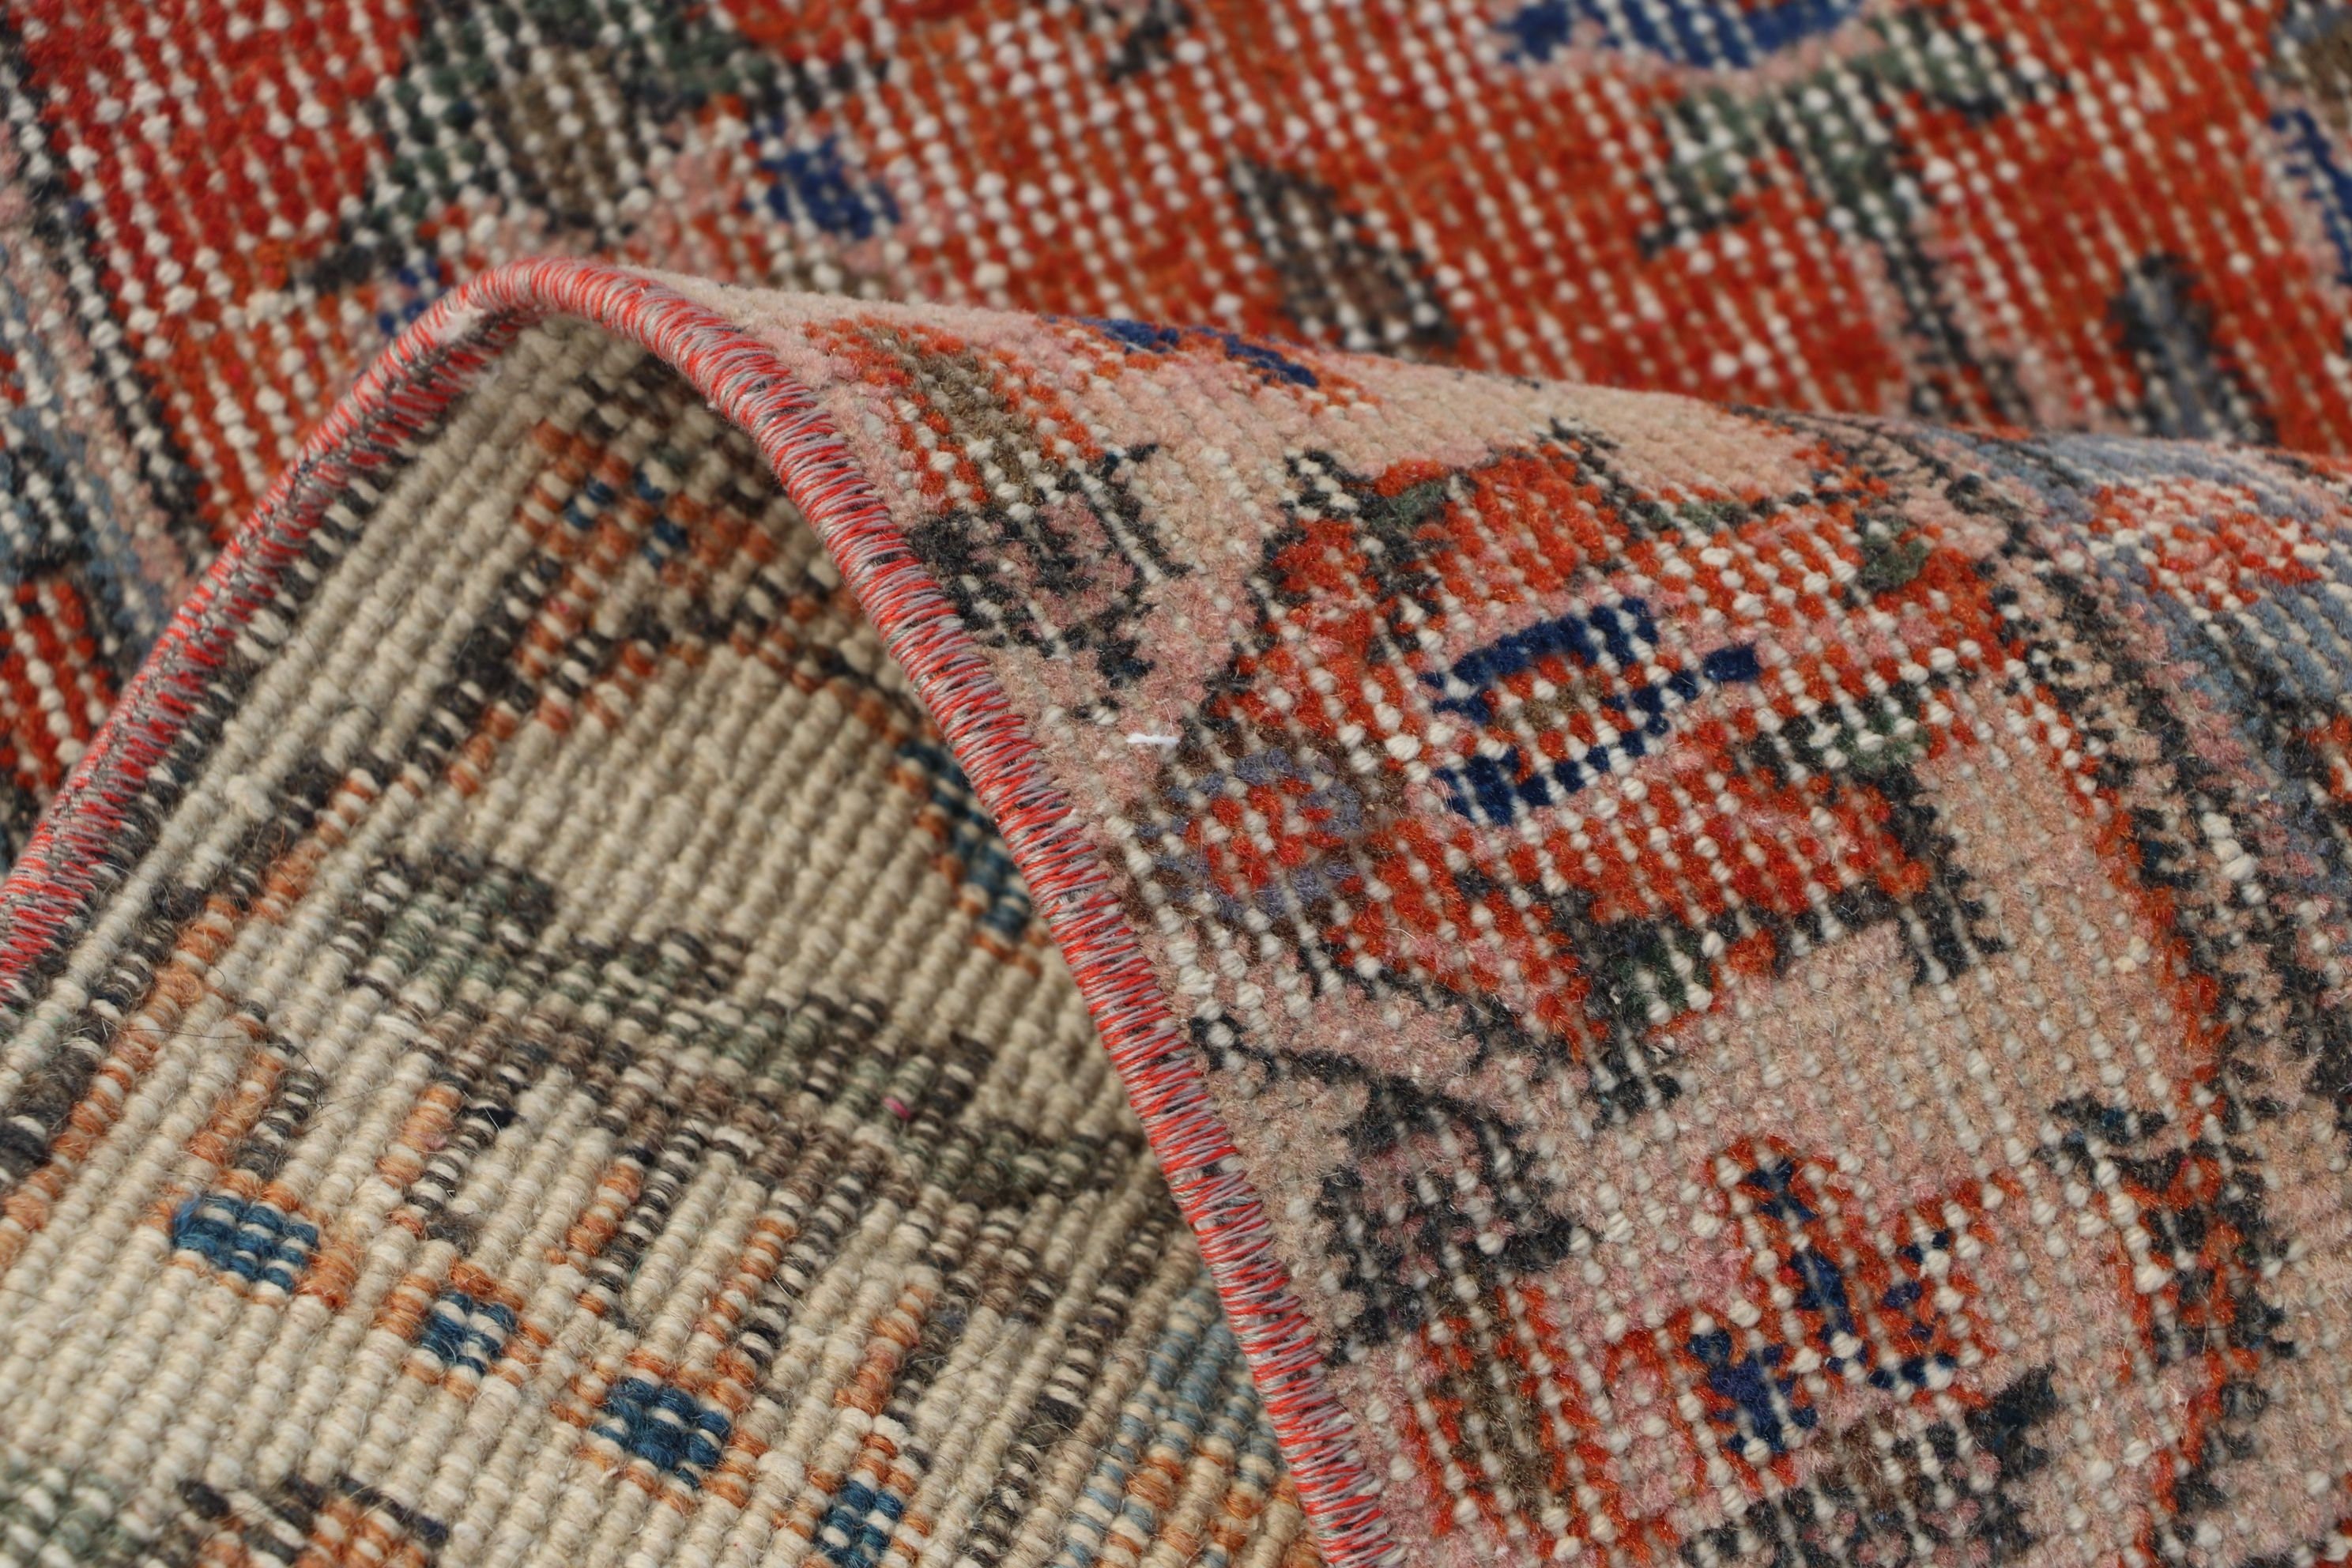 Anatolian Rug, Kitchen Rugs, Red Home Decor Rug, Wool Rugs, Corridor Rugs, Vintage Rug, 4.4x12.6 ft Runner Rug, Floor Rugs, Turkish Rug